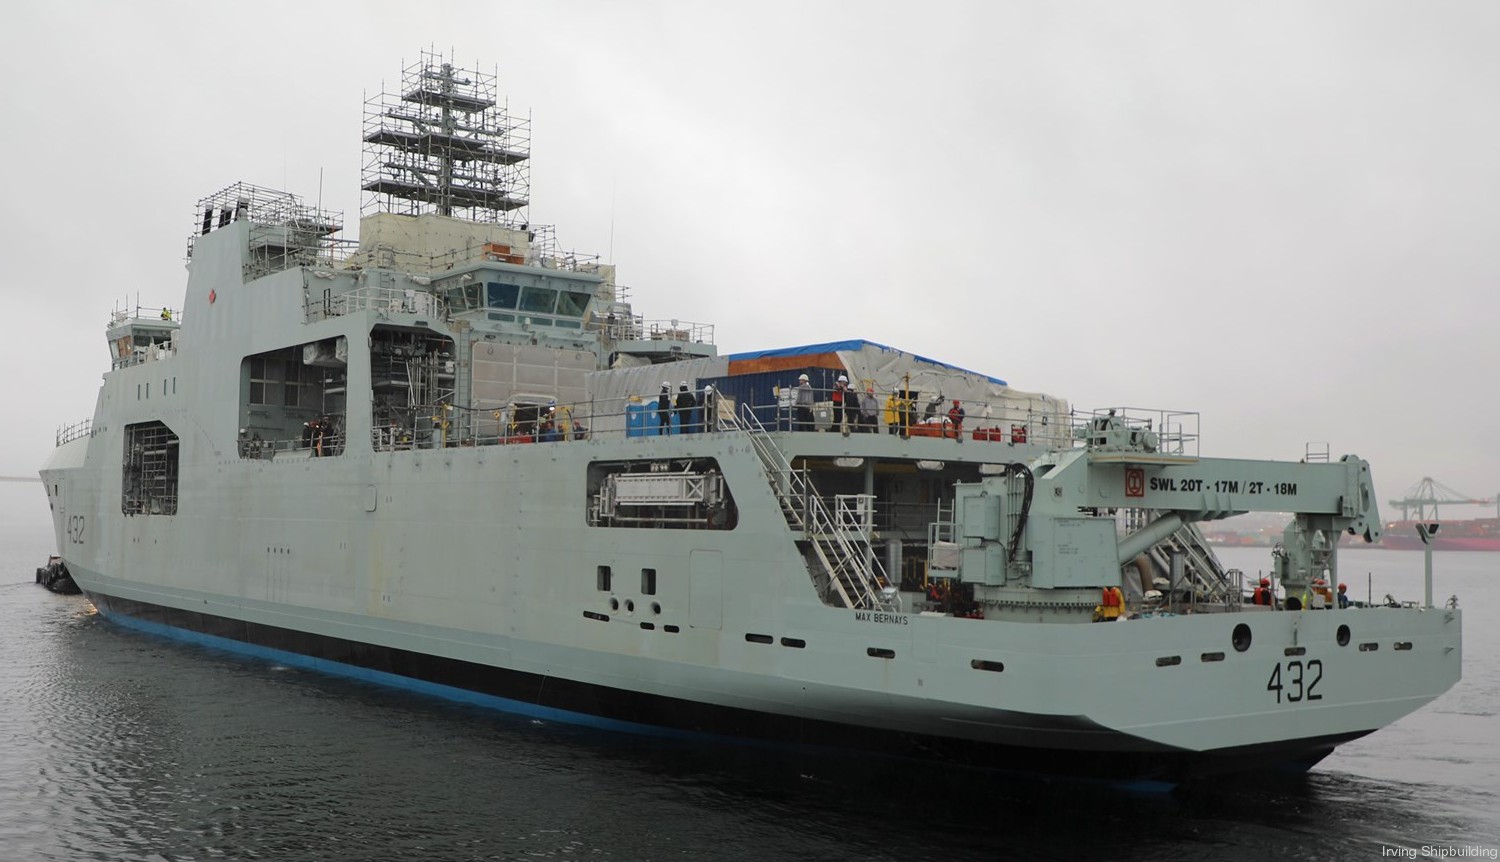 aopv-432 hmcs max bernays harry dewolf class arctic offshore patrol vessel ncsm royal canadian navy 05